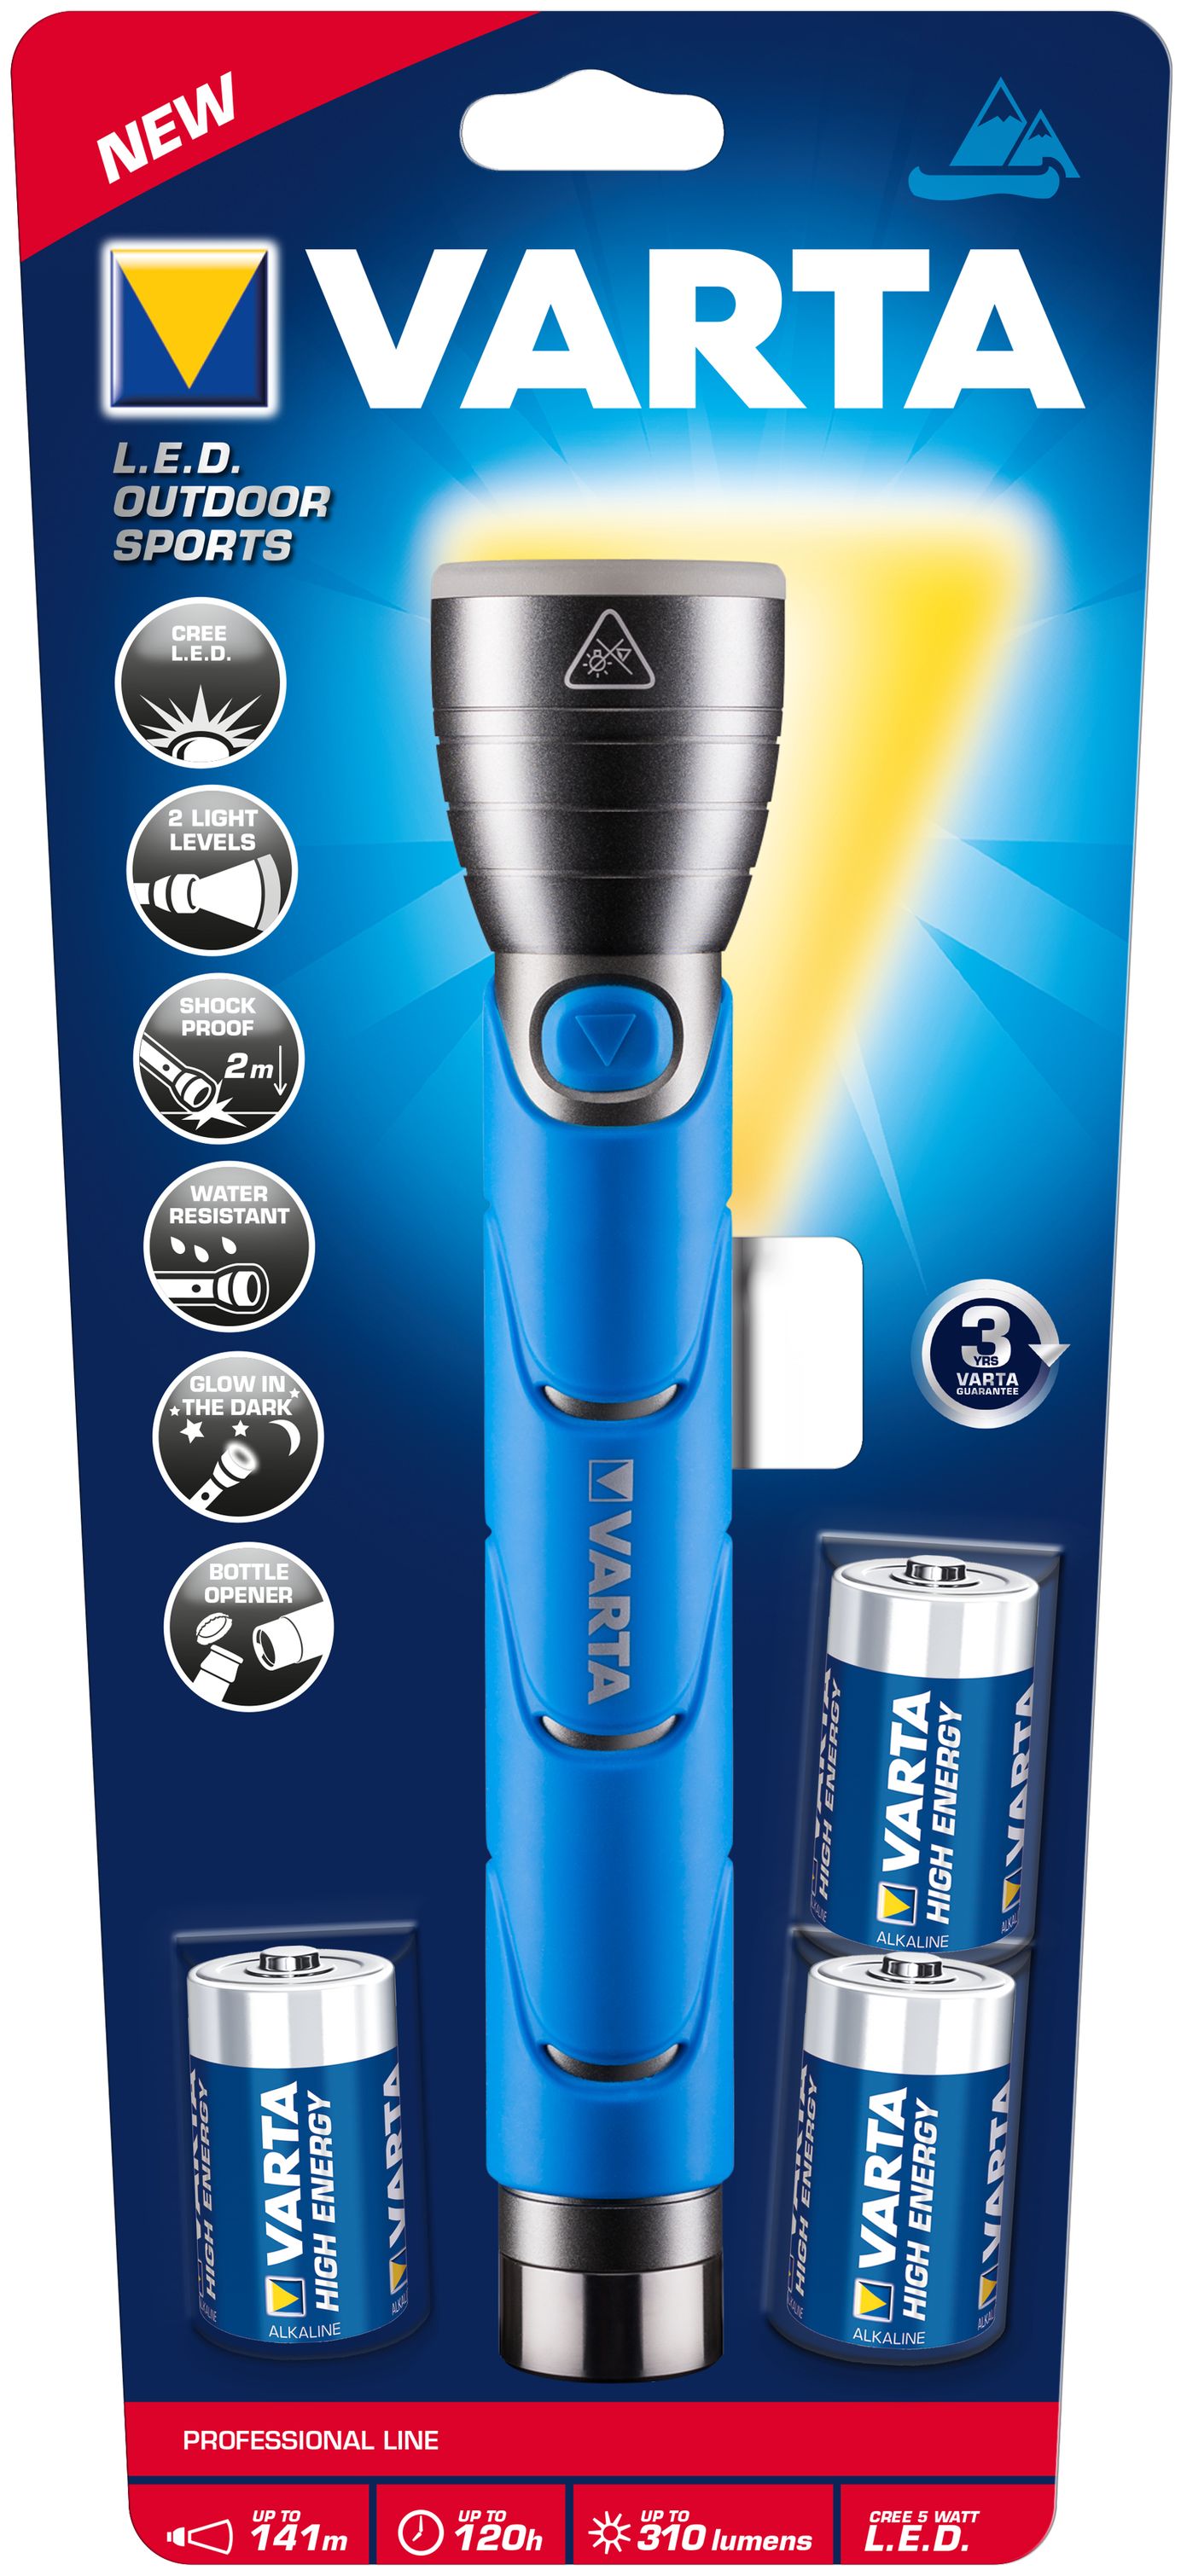 Varta Outdoor Sports Flashlight 3C LED-Taschenlampe 2 Leuchtmodi bei  Boomstore